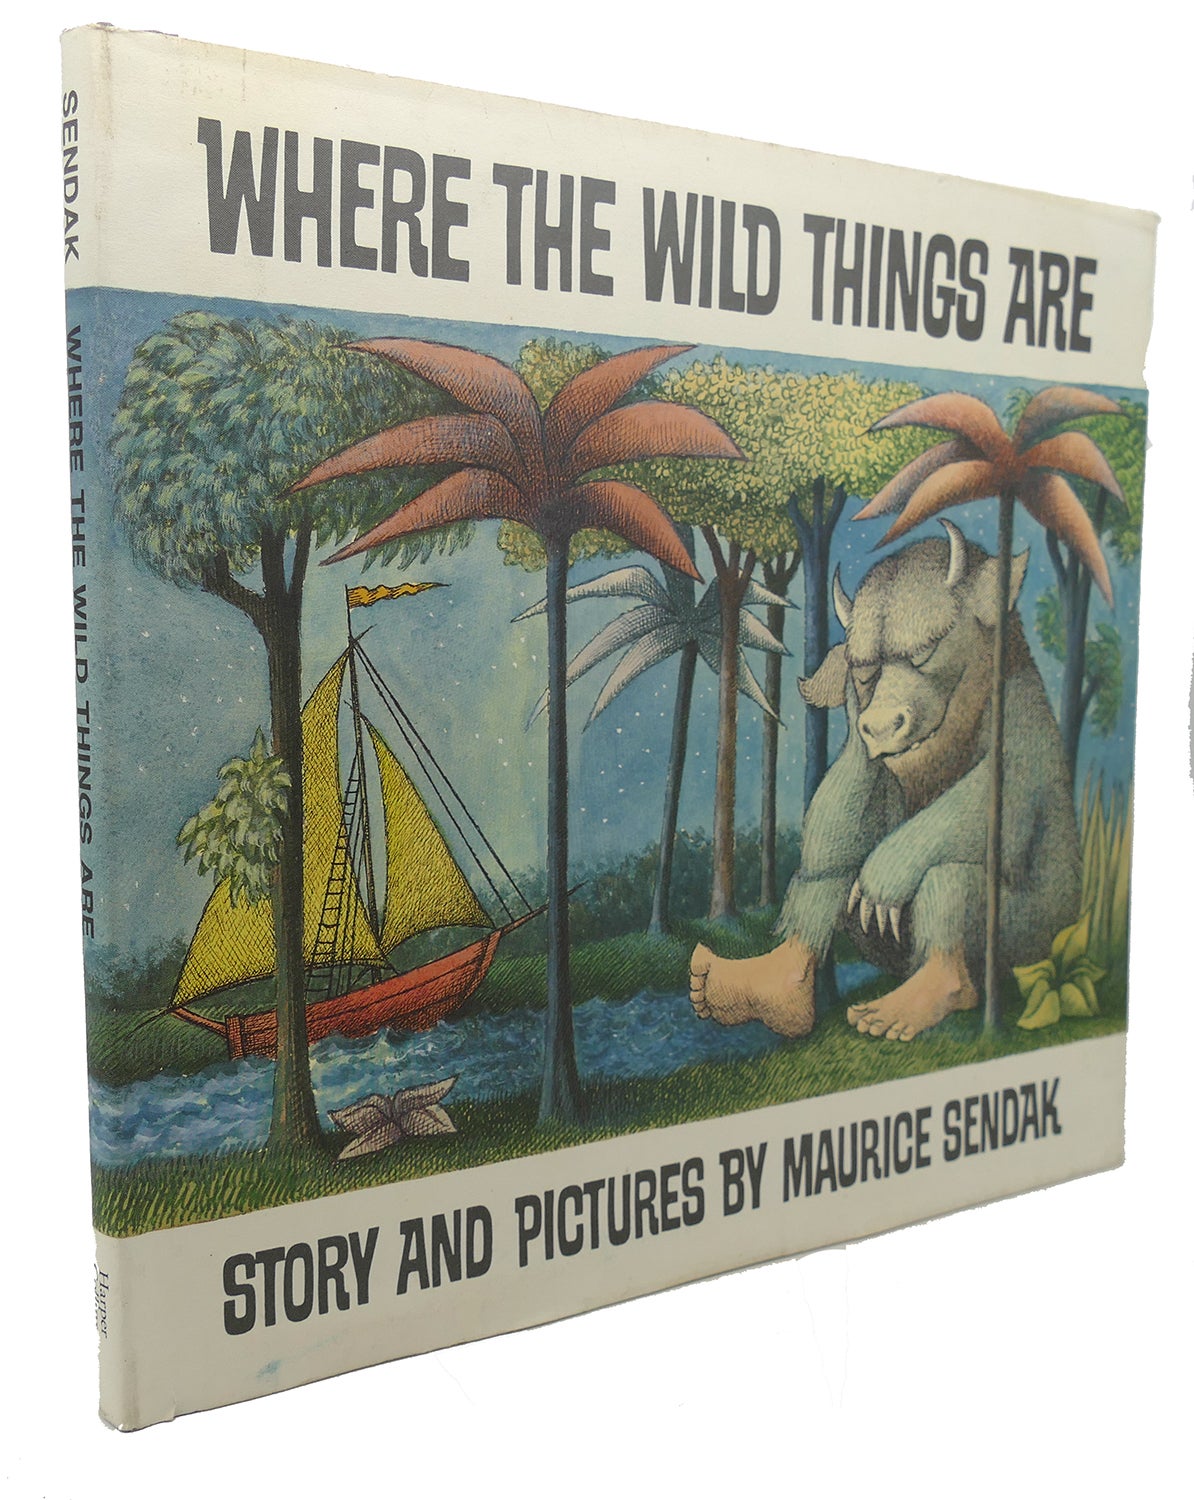 WILD　WHERE　THE　Anniversary　THINGS　Sendak　ARE　Maurice　25th　Edition